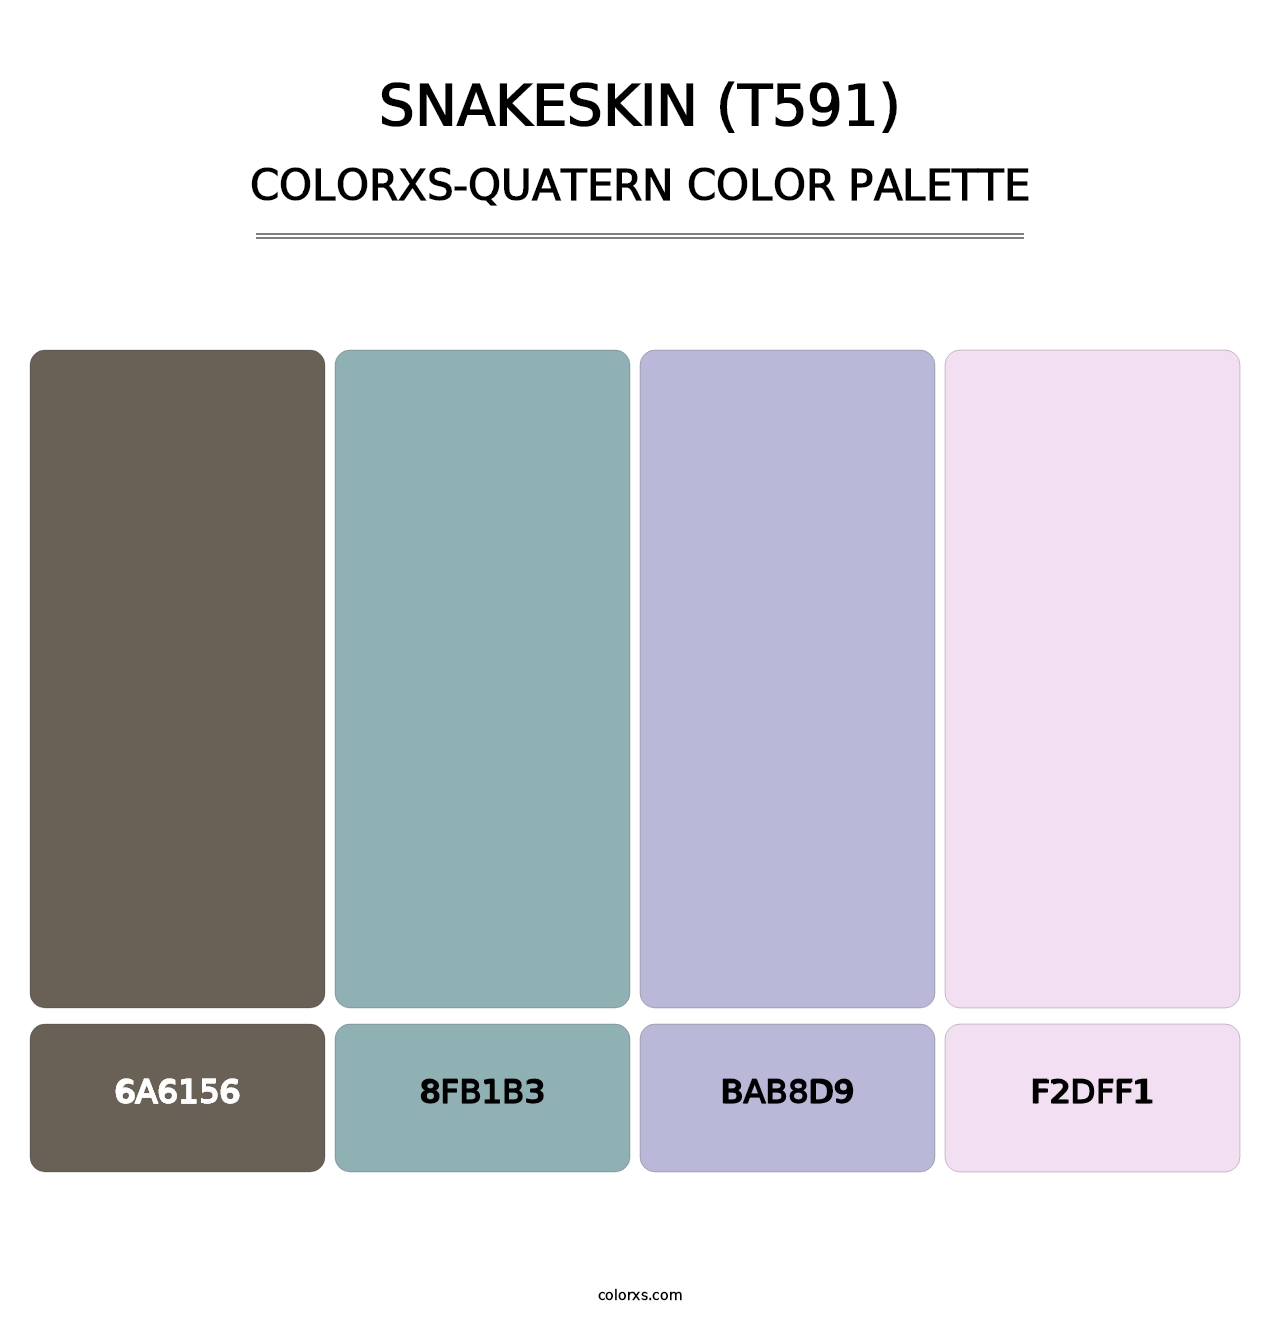 Snakeskin (T591) - Colorxs Quatern Palette